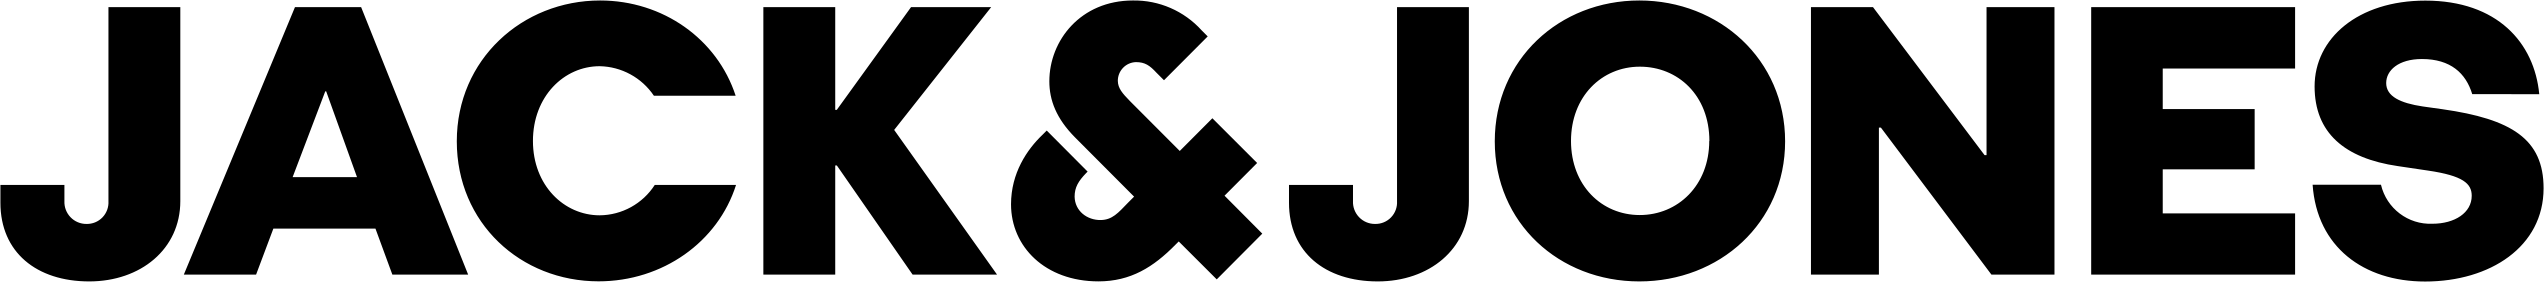 Jack&Jones logo example in black and white